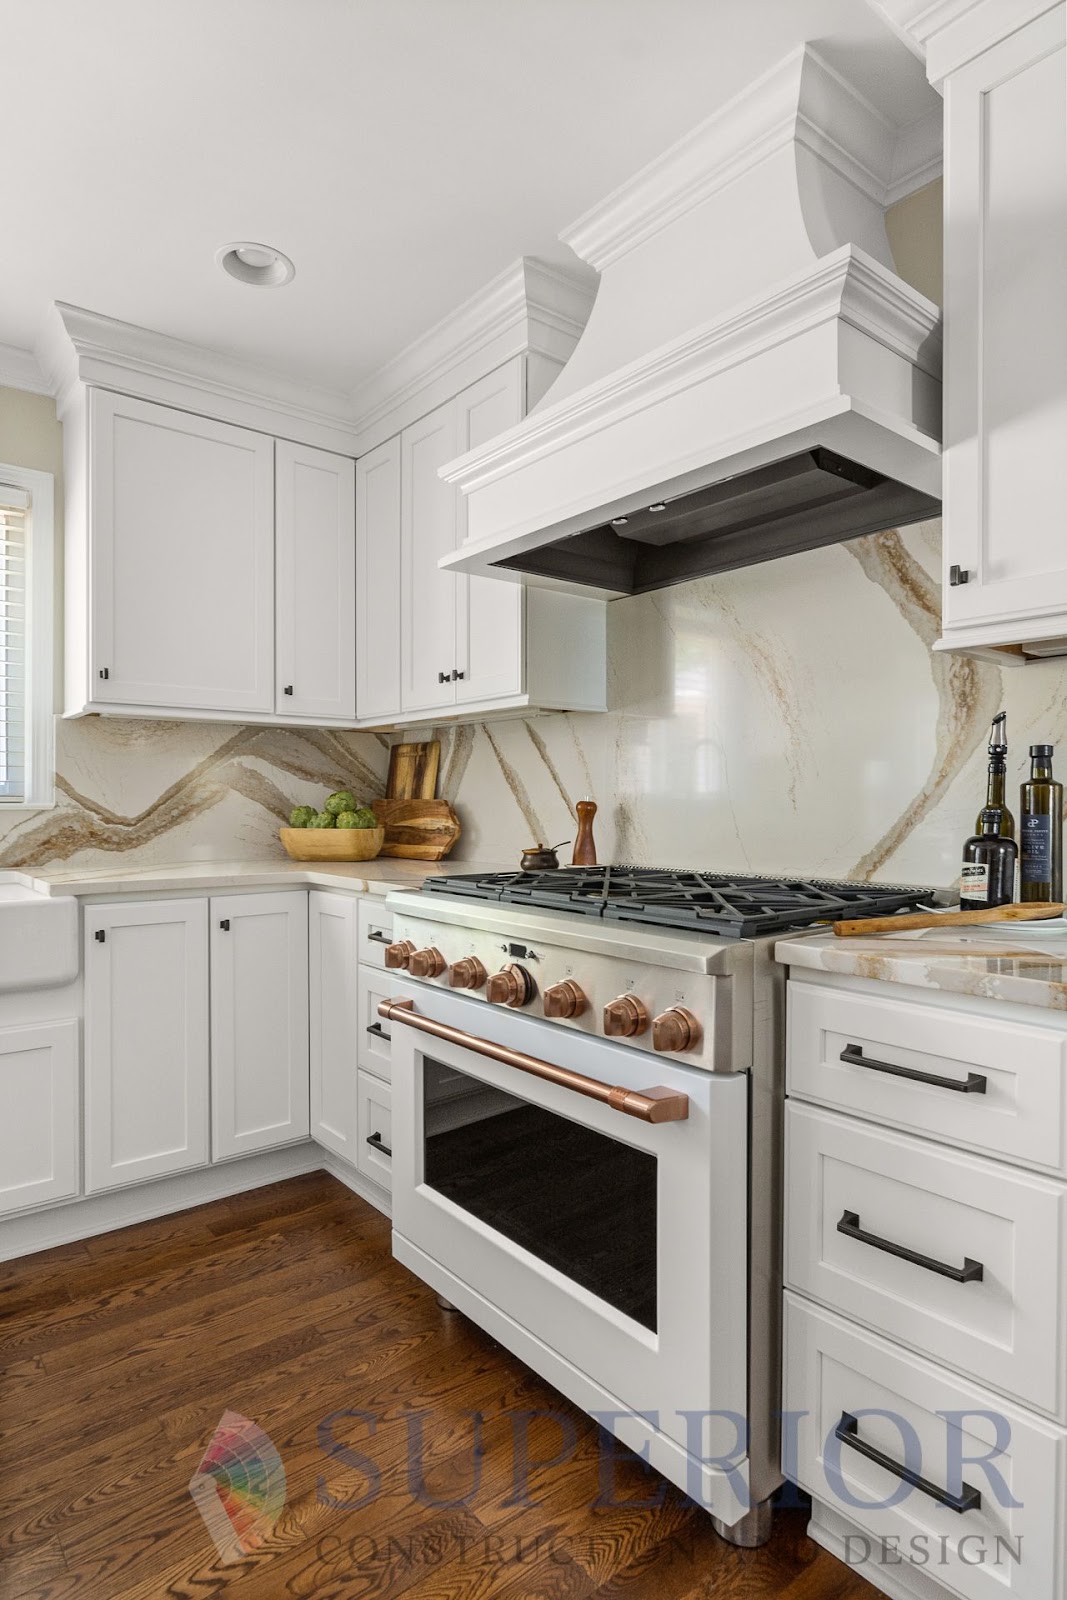 kitchen remodel mt juliet tn cambria quartz counters backsplash white hood trim GE cafe appliances